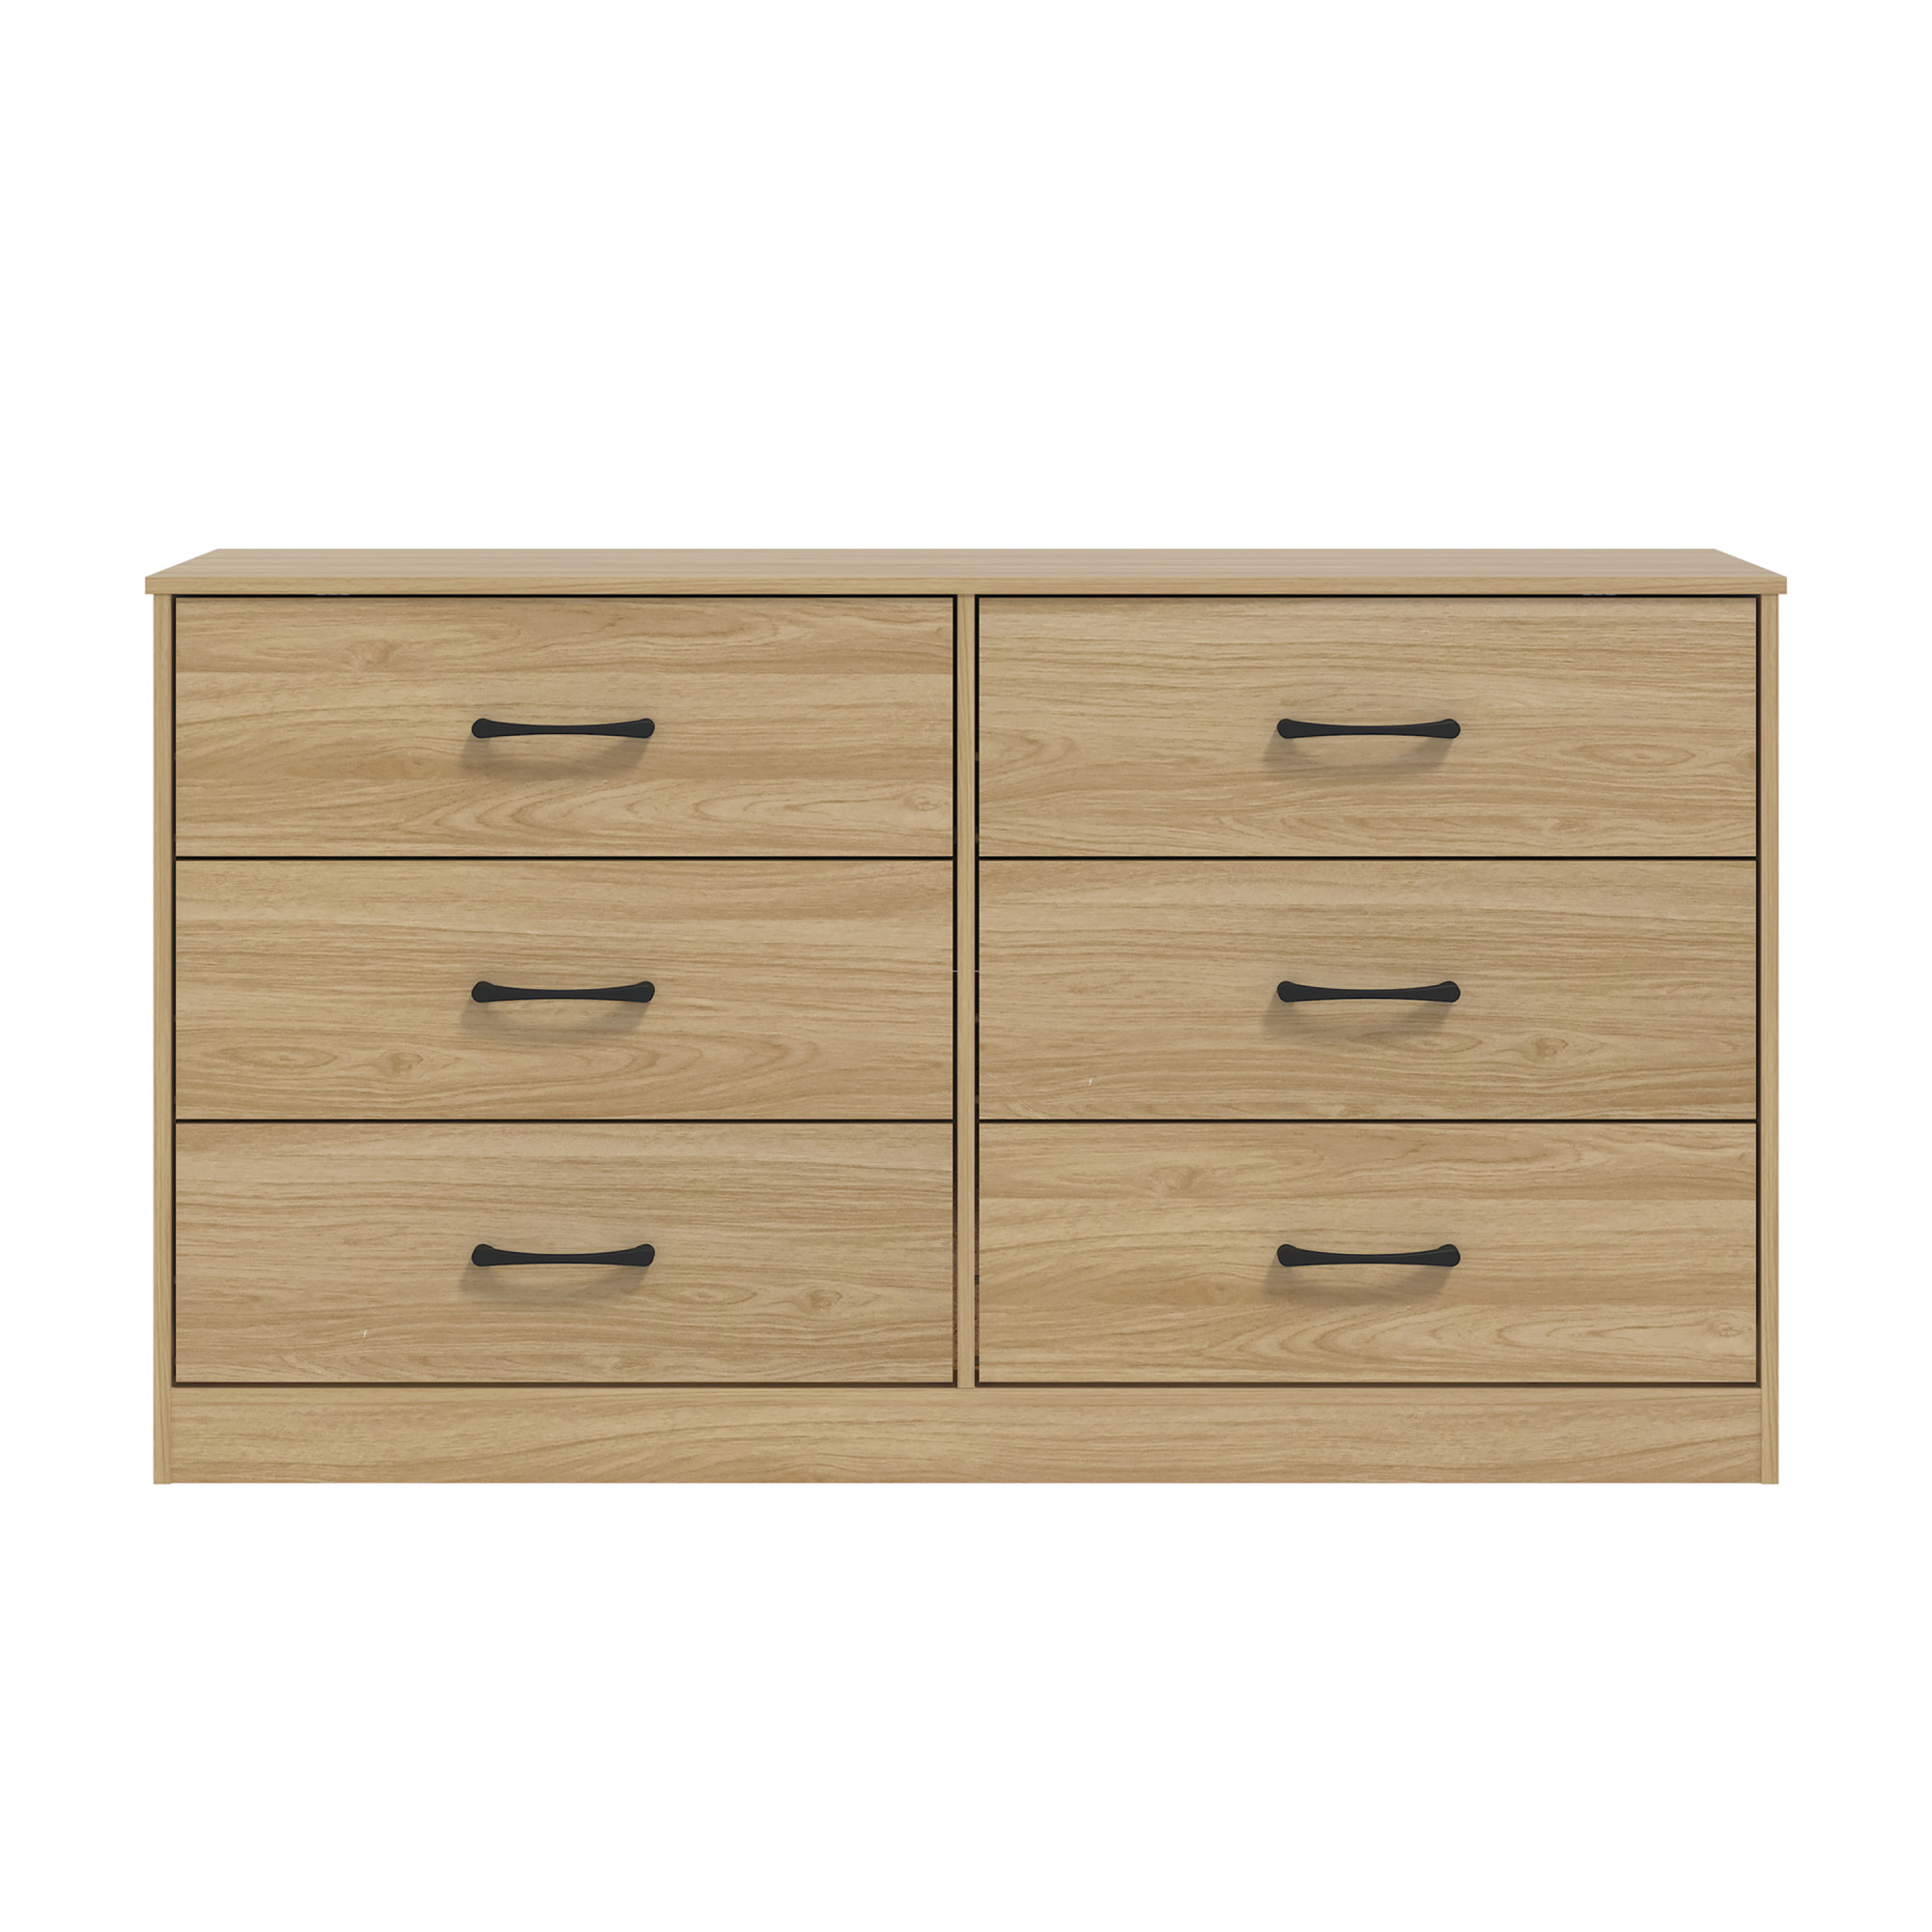 Mainstays Ardent 6 Drawer Dresser, Euro Oak - image 3 of 20